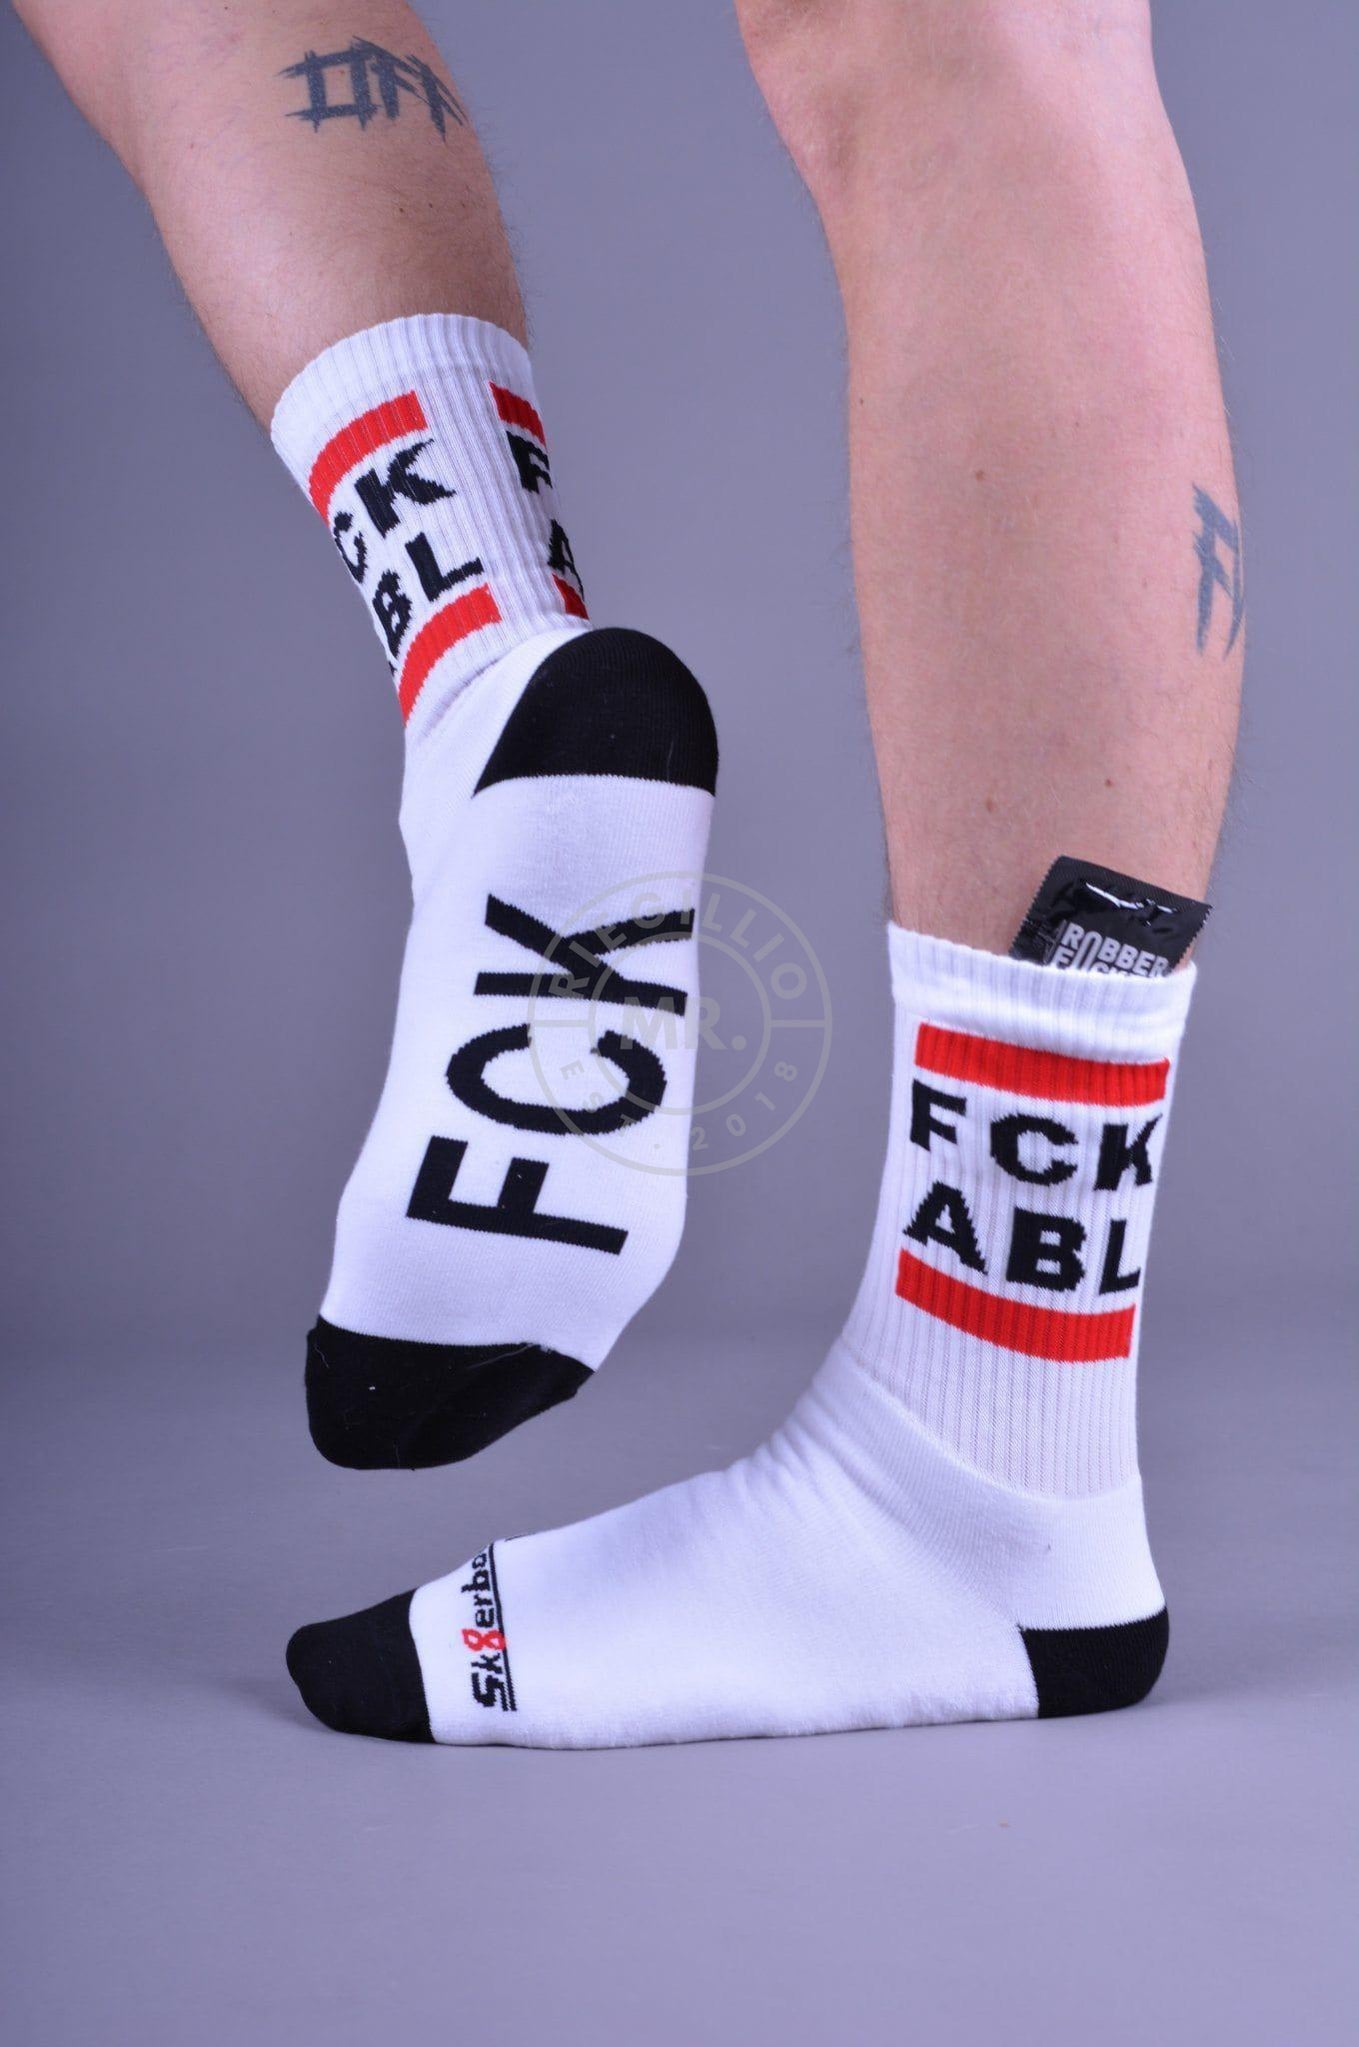 Sk8erboy FCK ABL Socks at MR. Riegillio